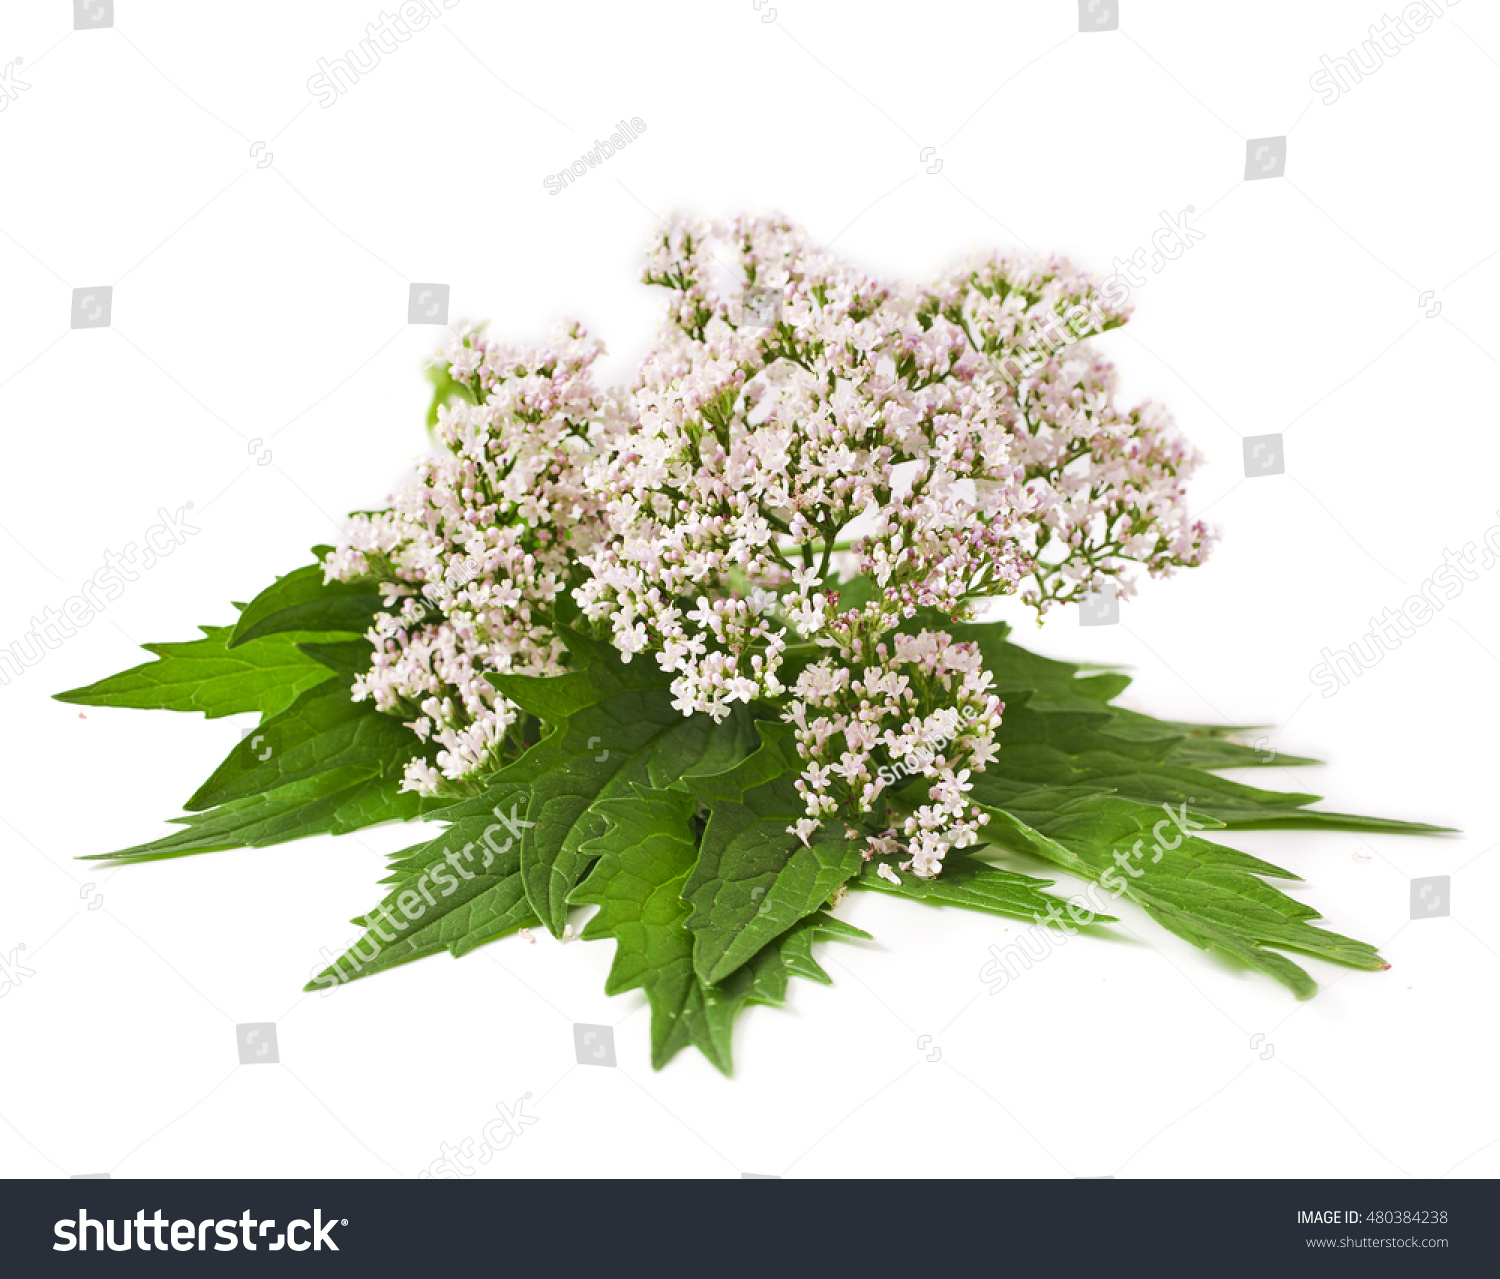 Valerian herb flower sprigs isolated on white background #480384238